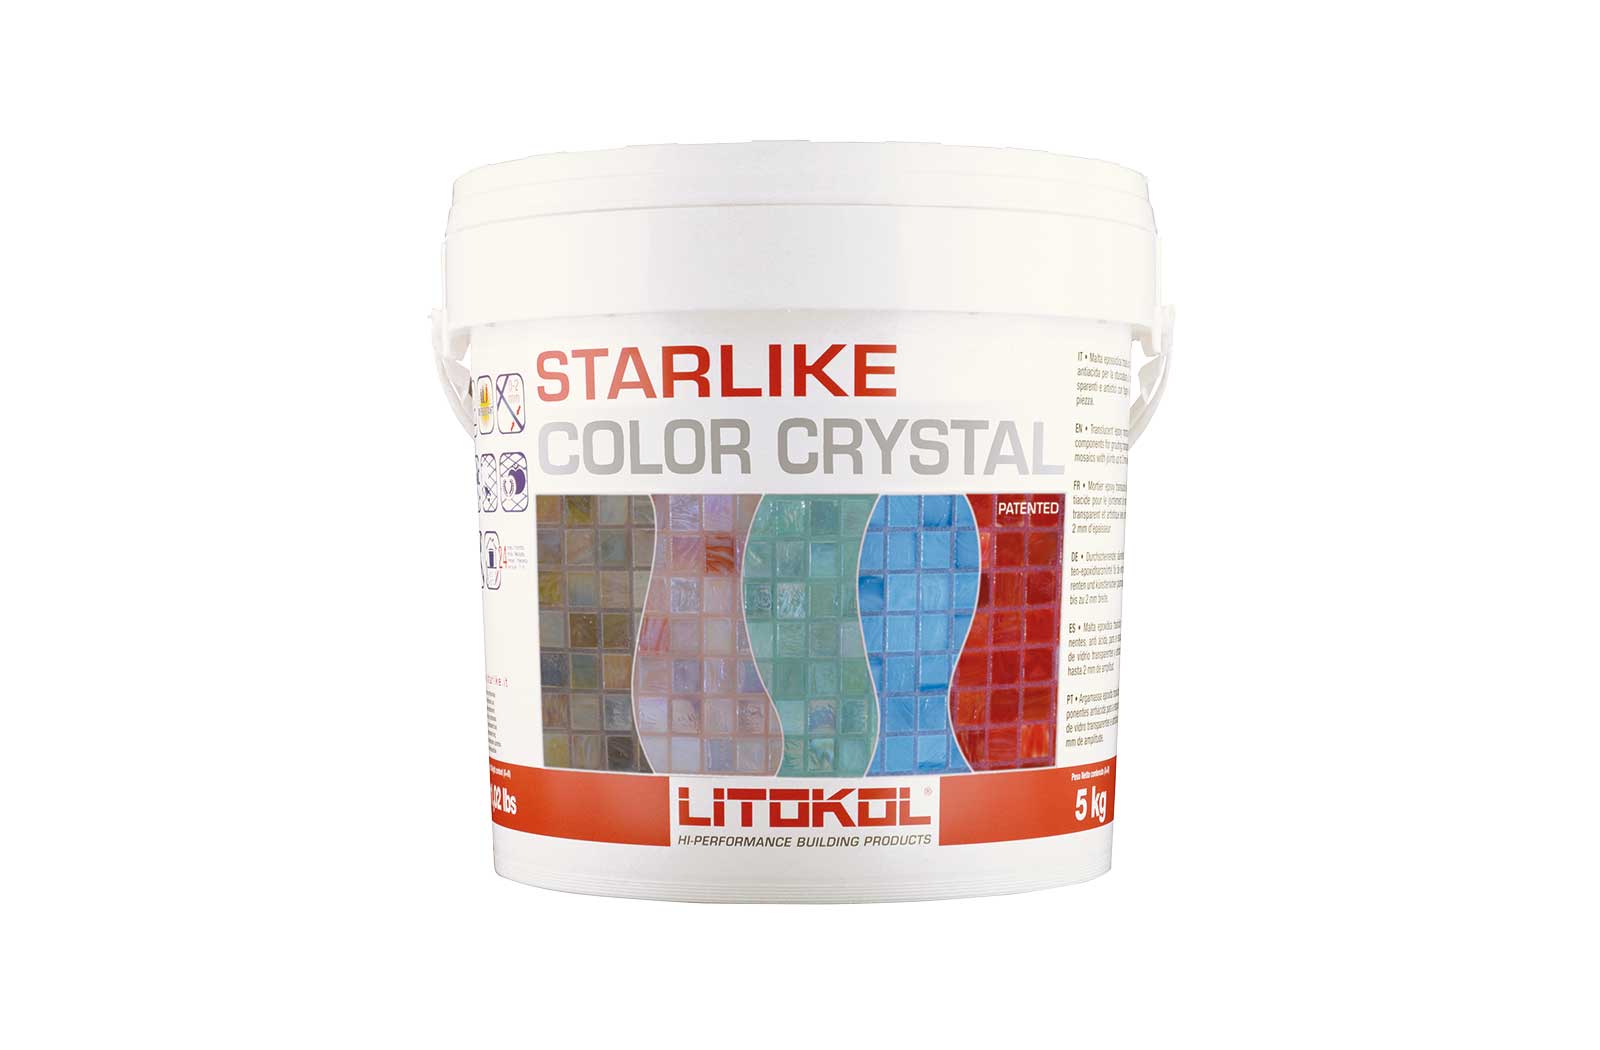 Mise en oeuvre Litokol Starlike colorcrystal 0